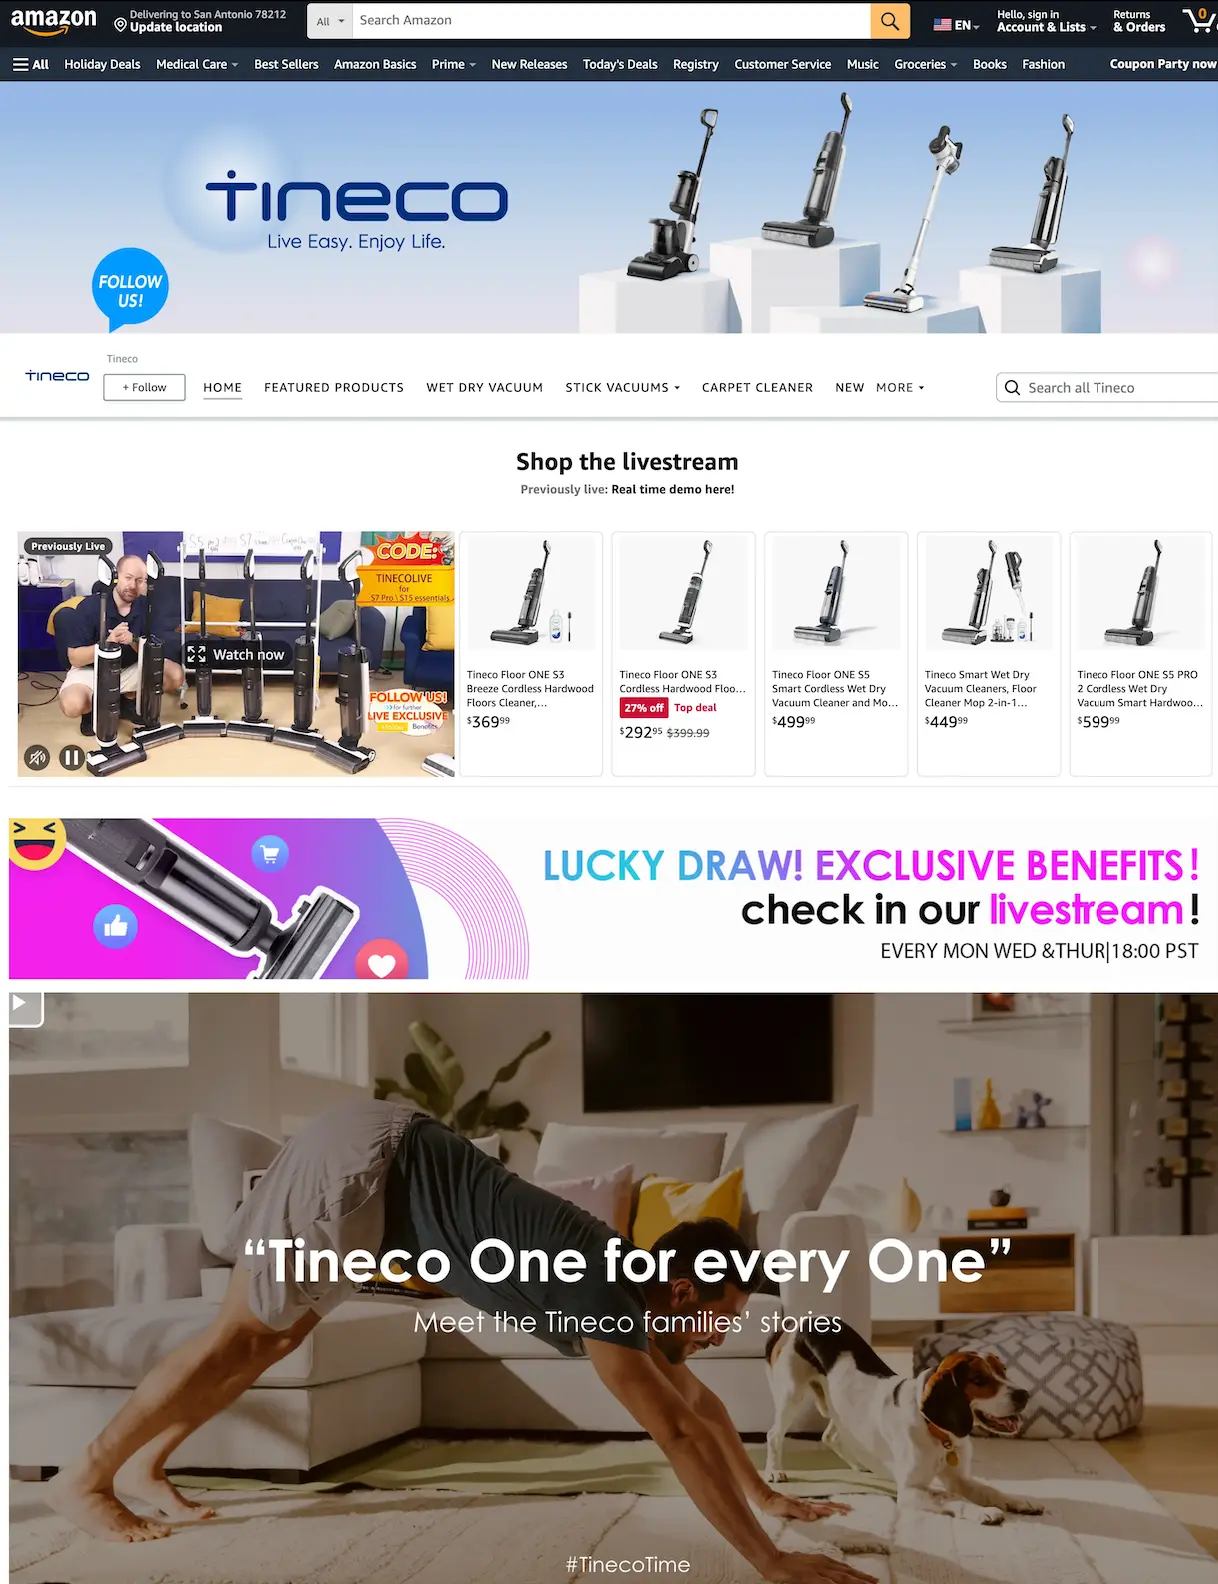 Tineco Amazon seller page